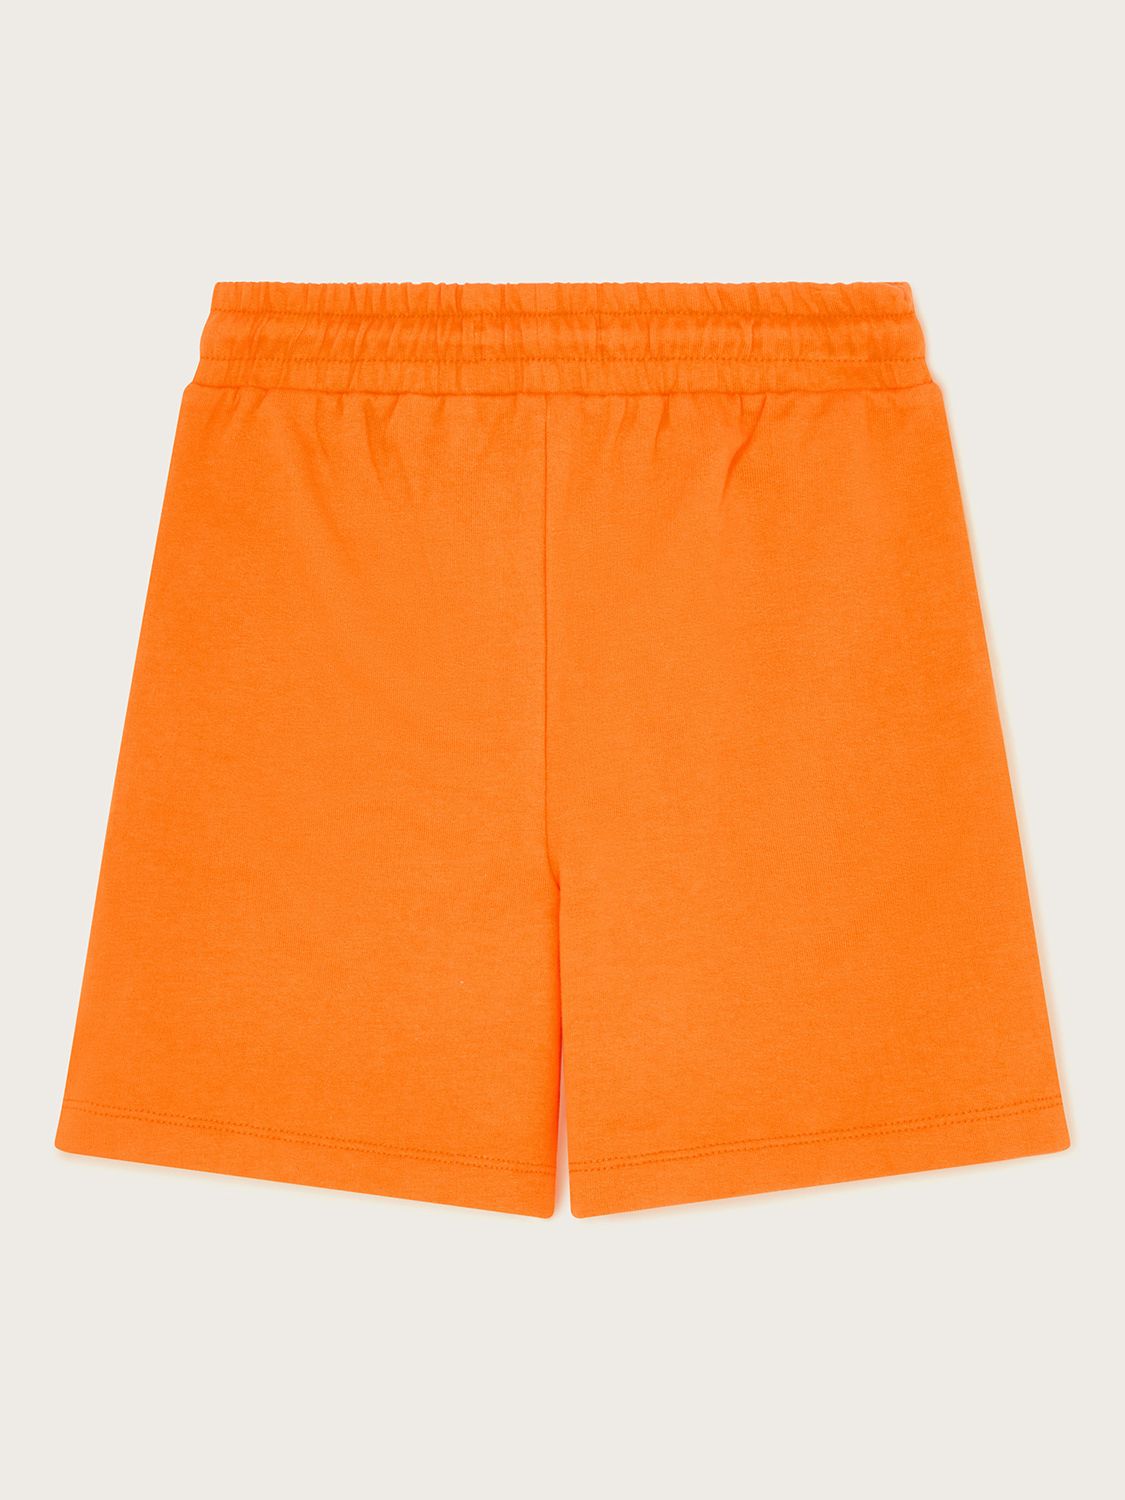 Monsoon Kids' Cotton Jogger Shorts, Orange, 3-4 years